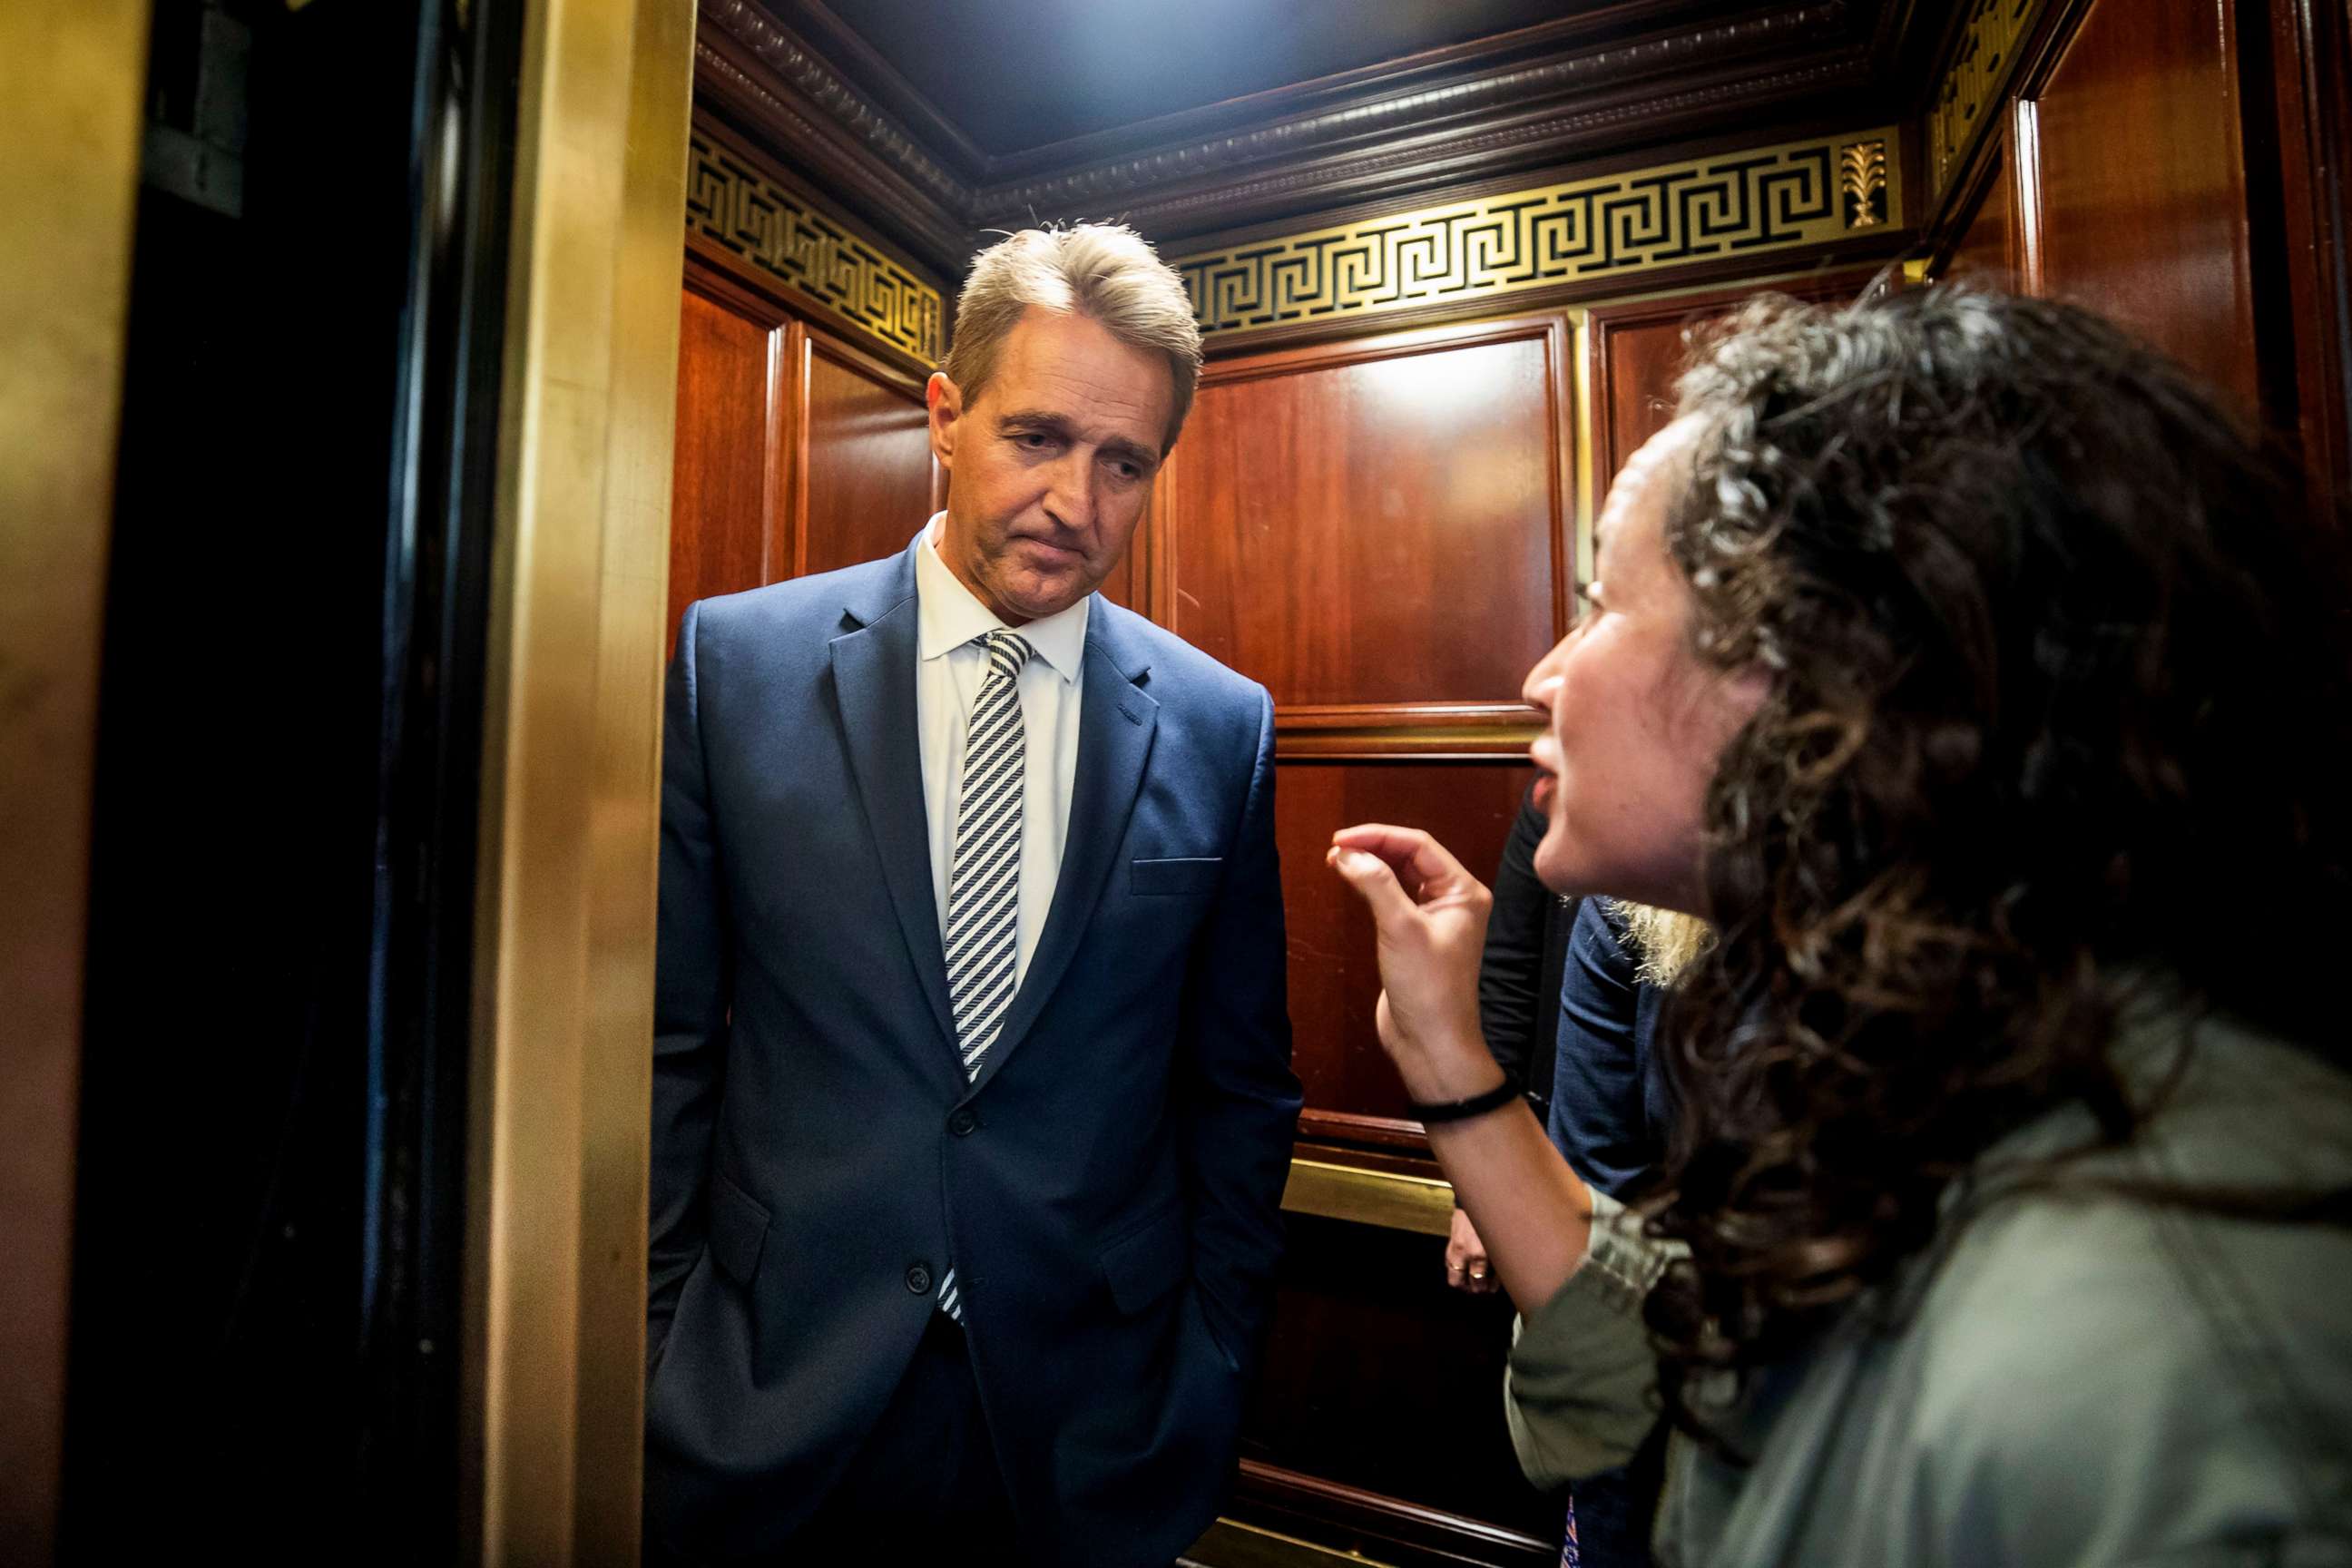 PHOTO: Ana Maria Archila confronts Senator Jeff Flake in an elevator in Washington ahead of a Senate Judiciary Committee meeting on the Supreme Court nomination of Brett Kavanaugh, Sept. 28, 2018.